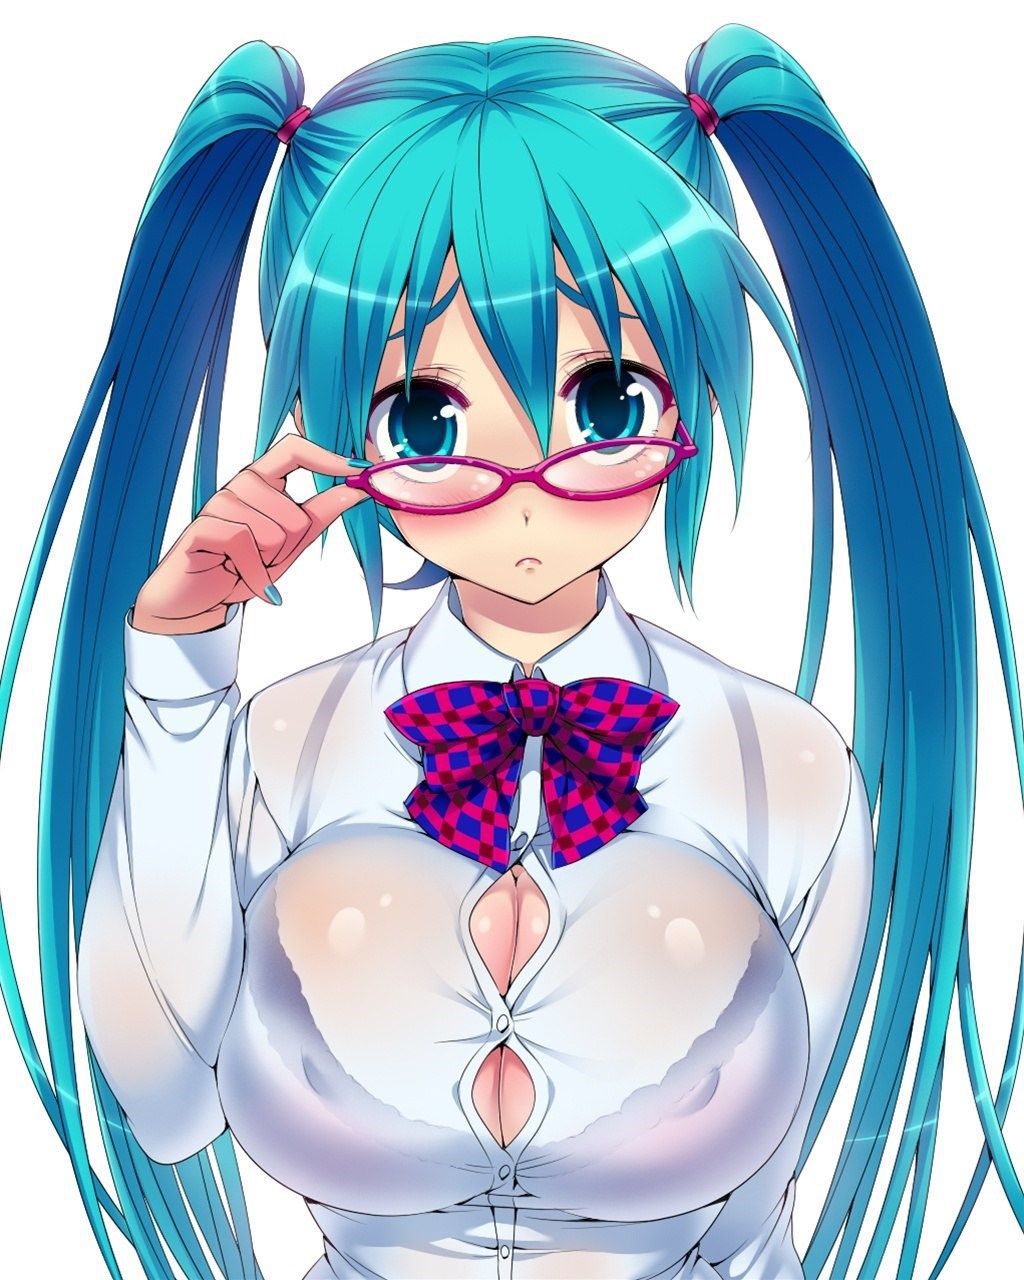 Naughty moe image of two-dimensional glasses girl 7